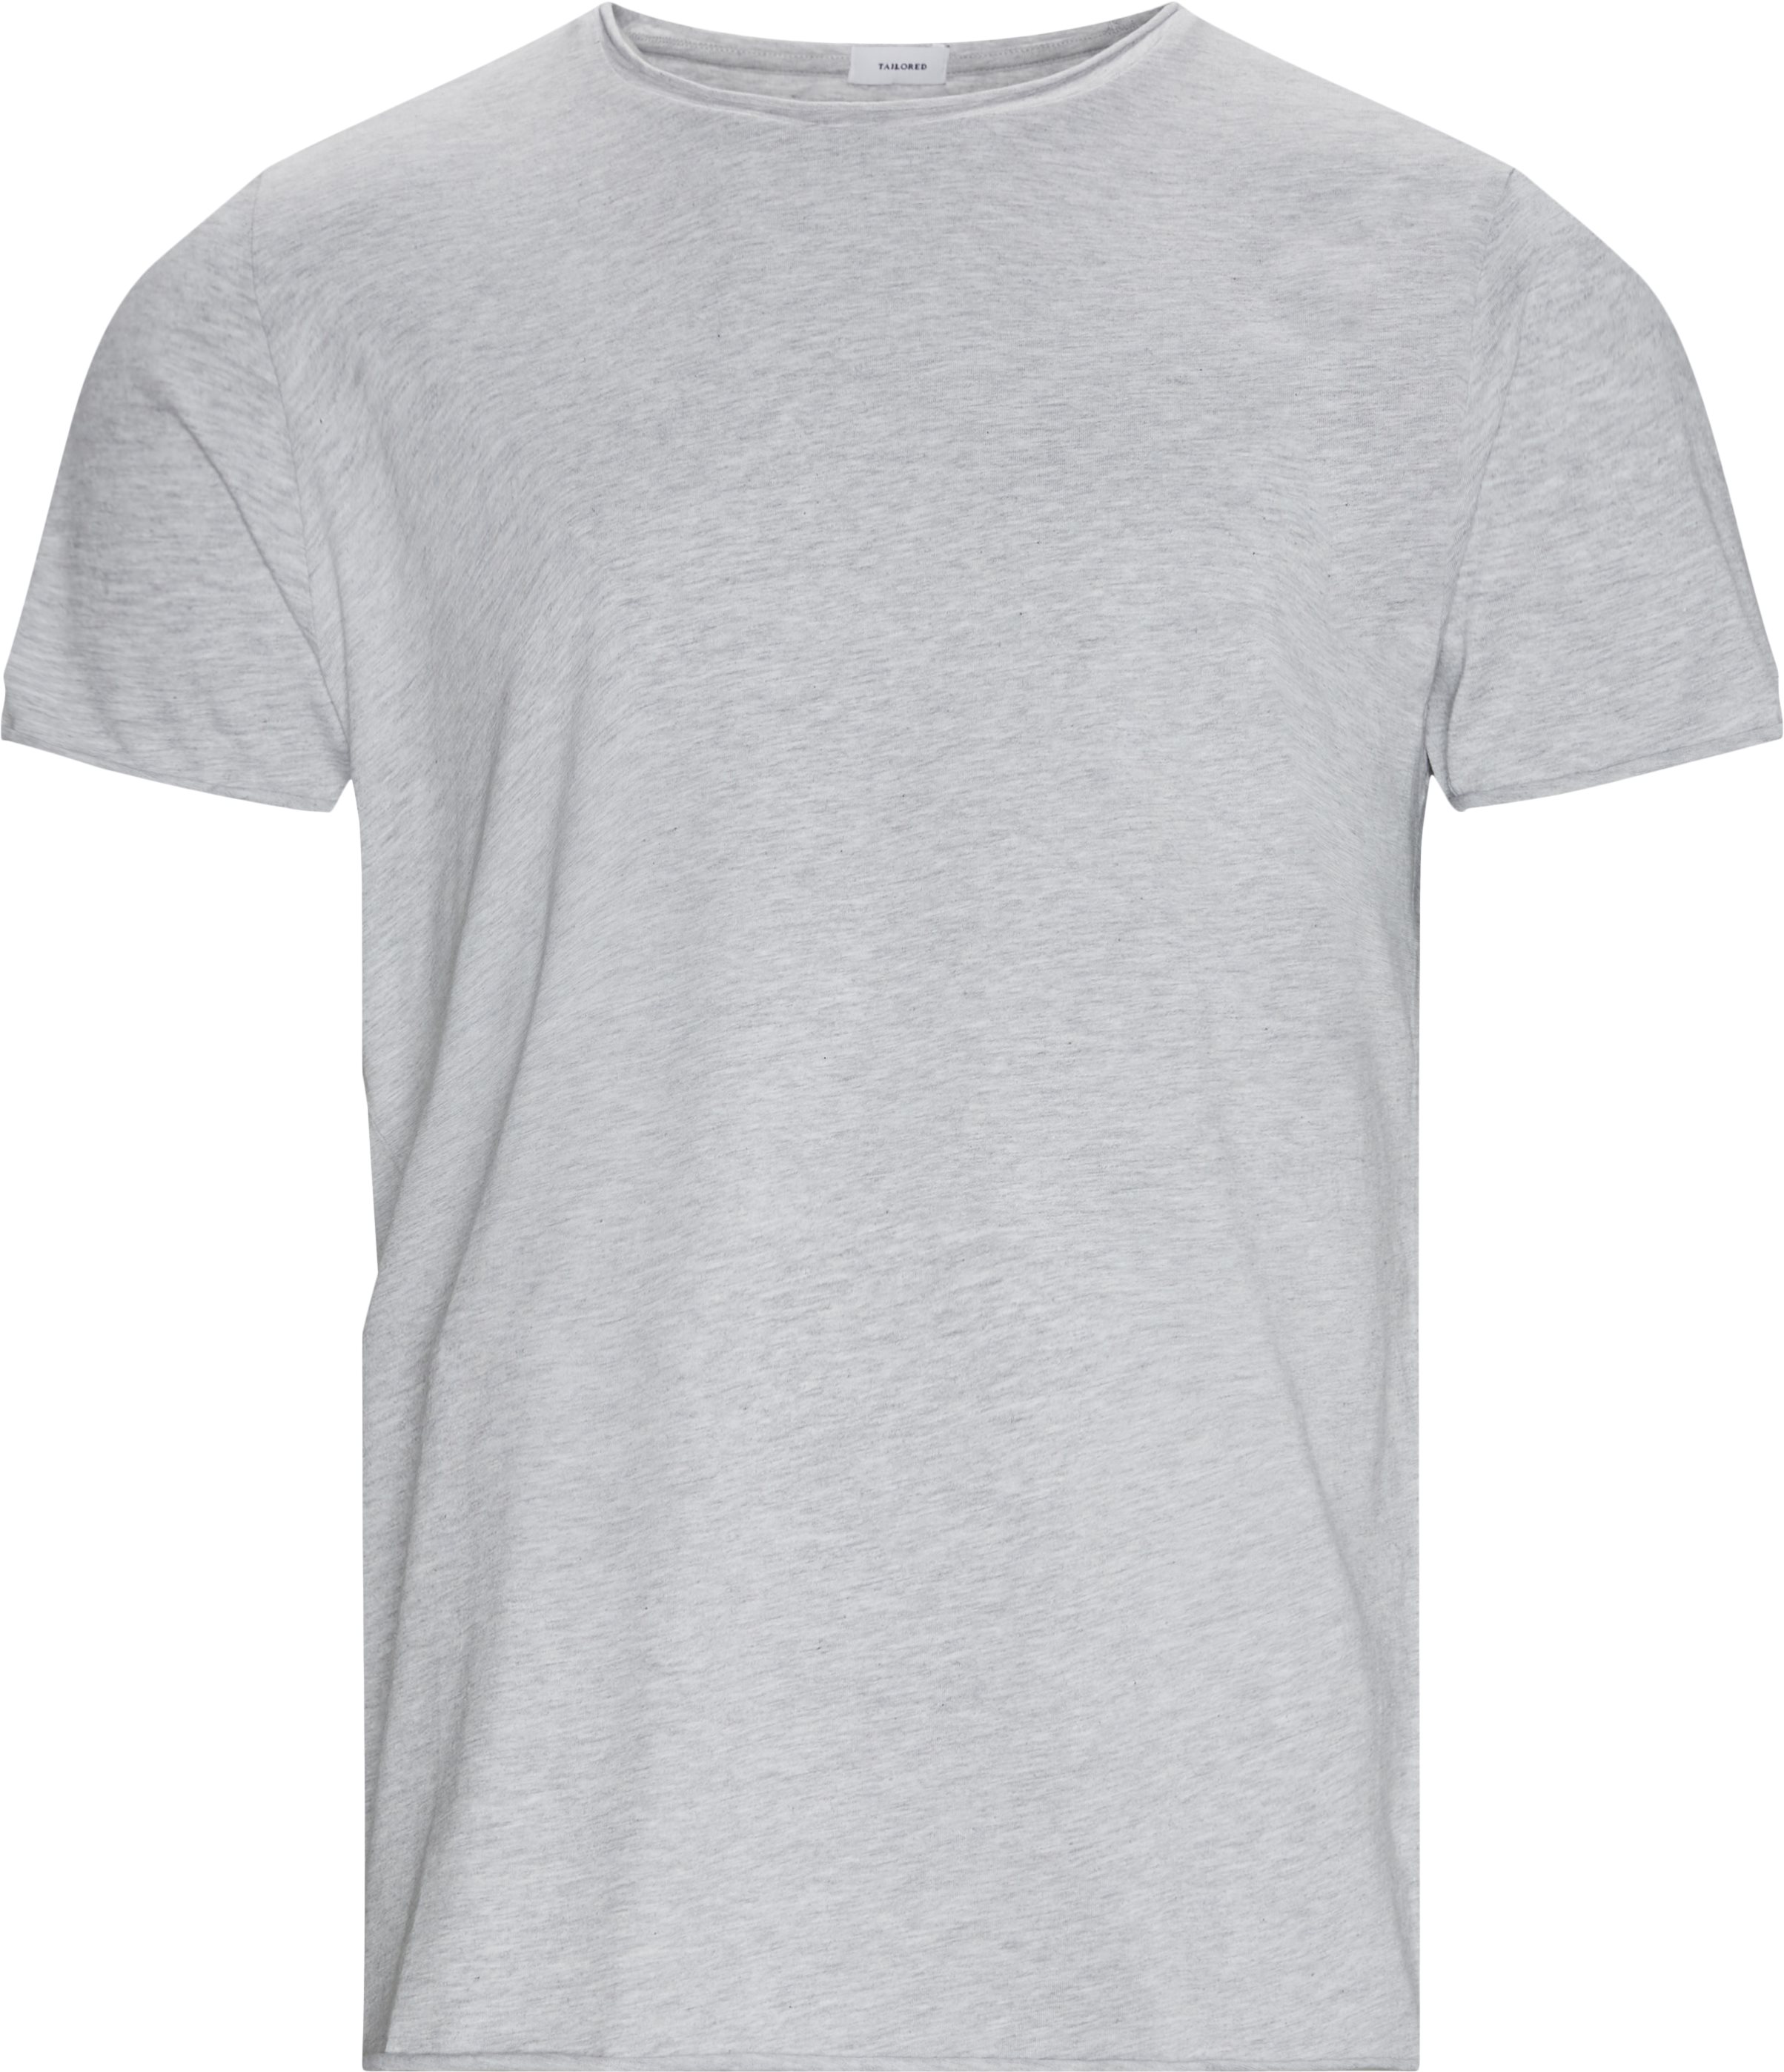 Raw Edge Tee - T-shirts - Regular fit - Grey